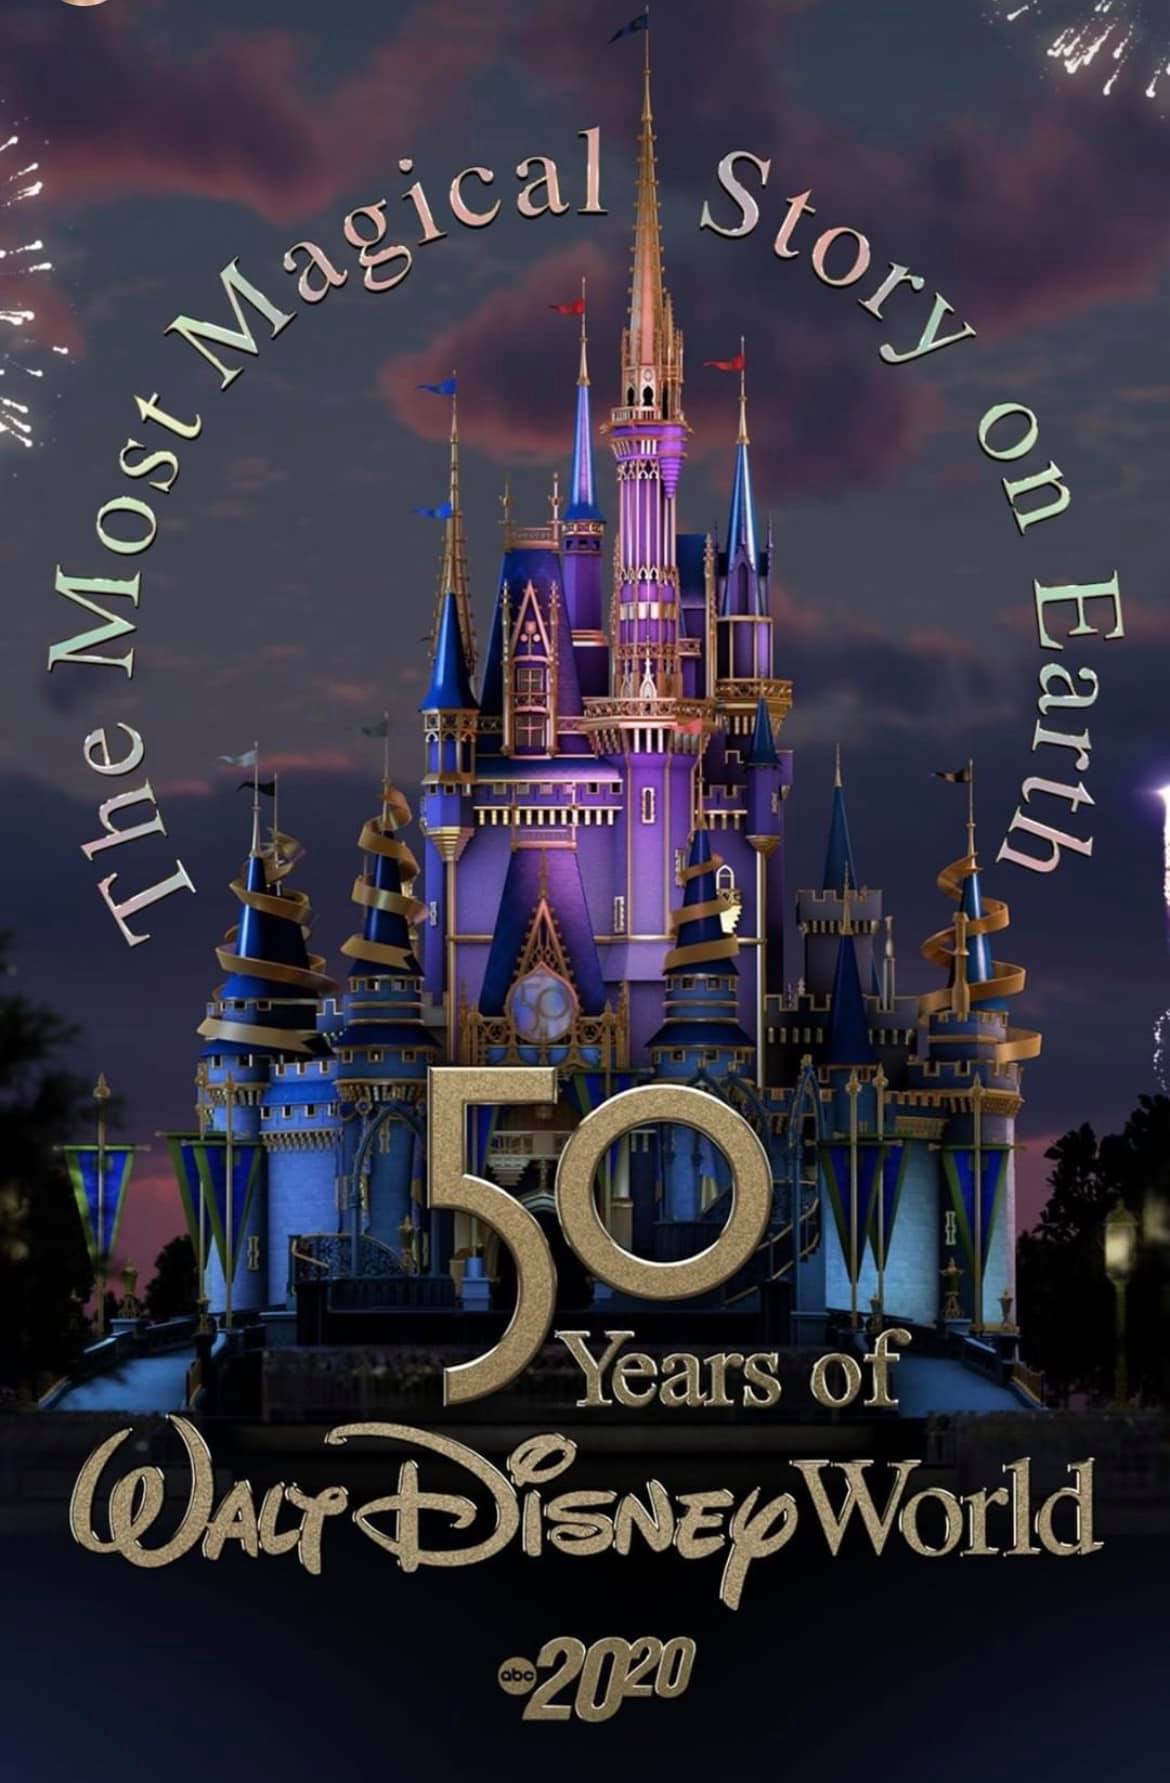 7982Enchantment Magic Kingdom Fireworks | Walt Disney World – 2021